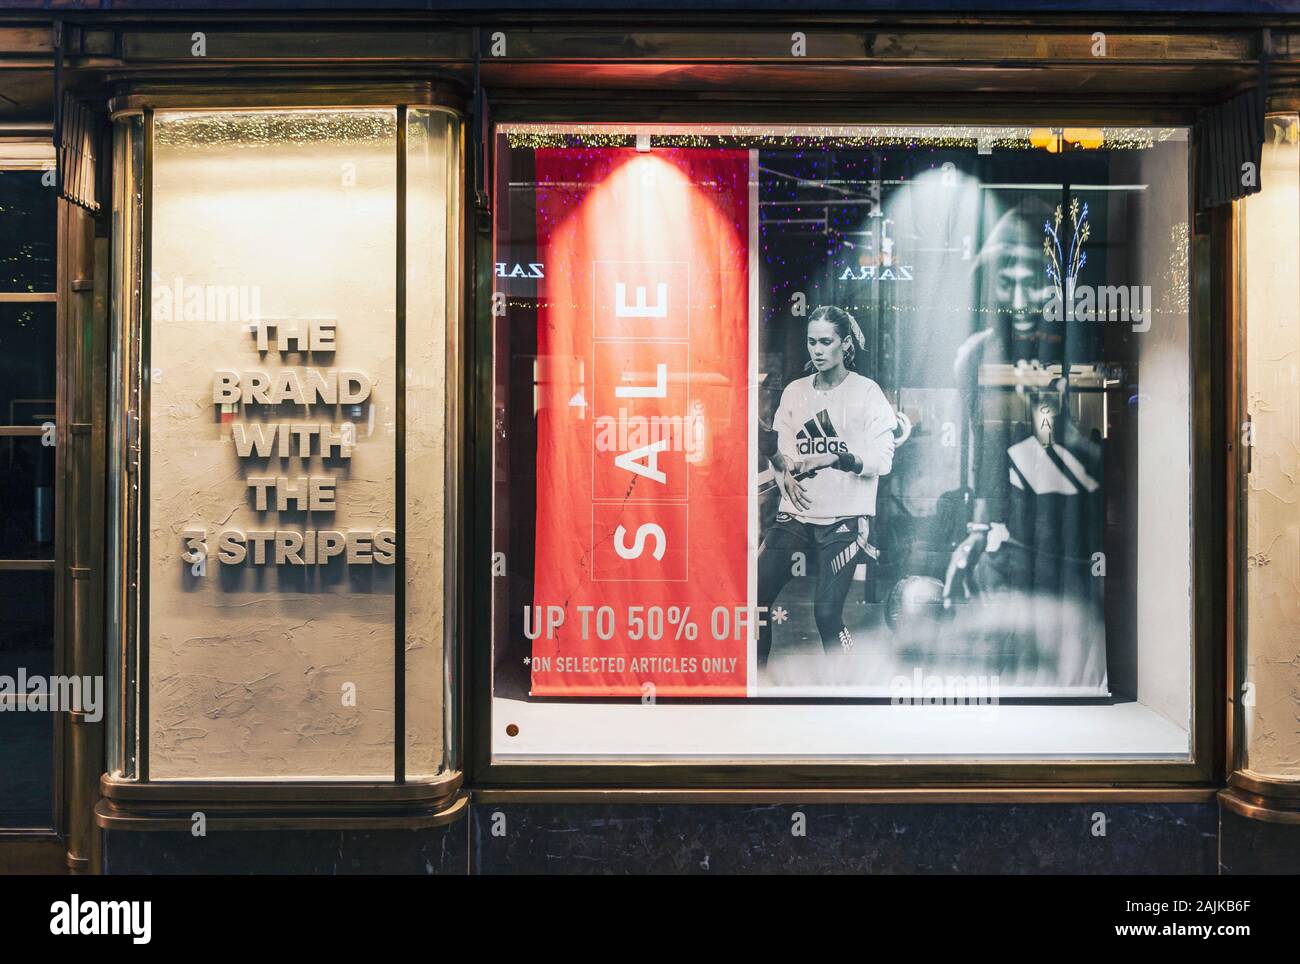 Adidas sportswear shop window display in the evening in Prague, Czech Republic. Stock Photo